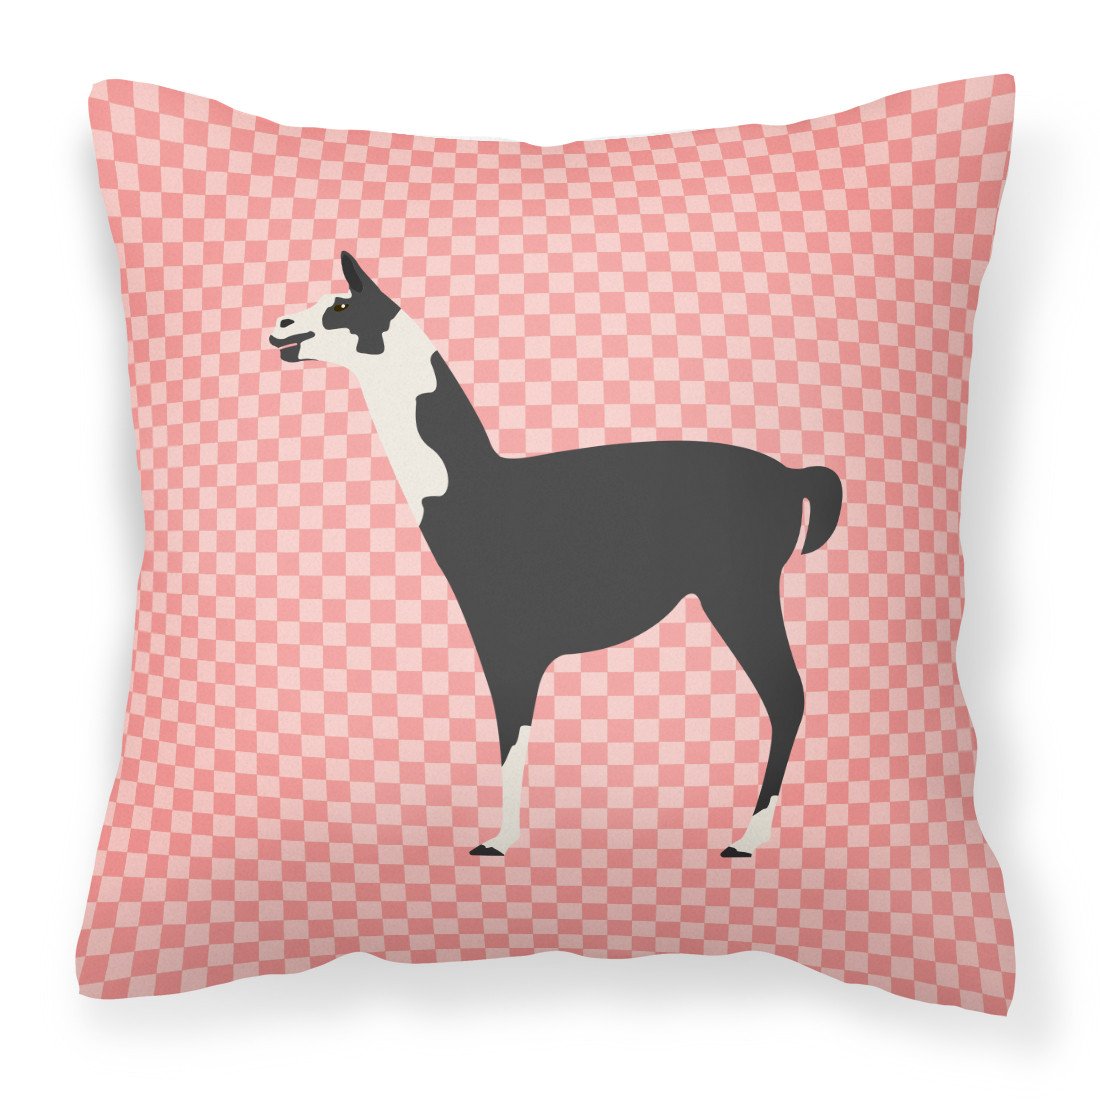 Llama Q' Ara Pink Check Fabric Decorative Pillow BB7918PW1818 by Caroline's Treasures